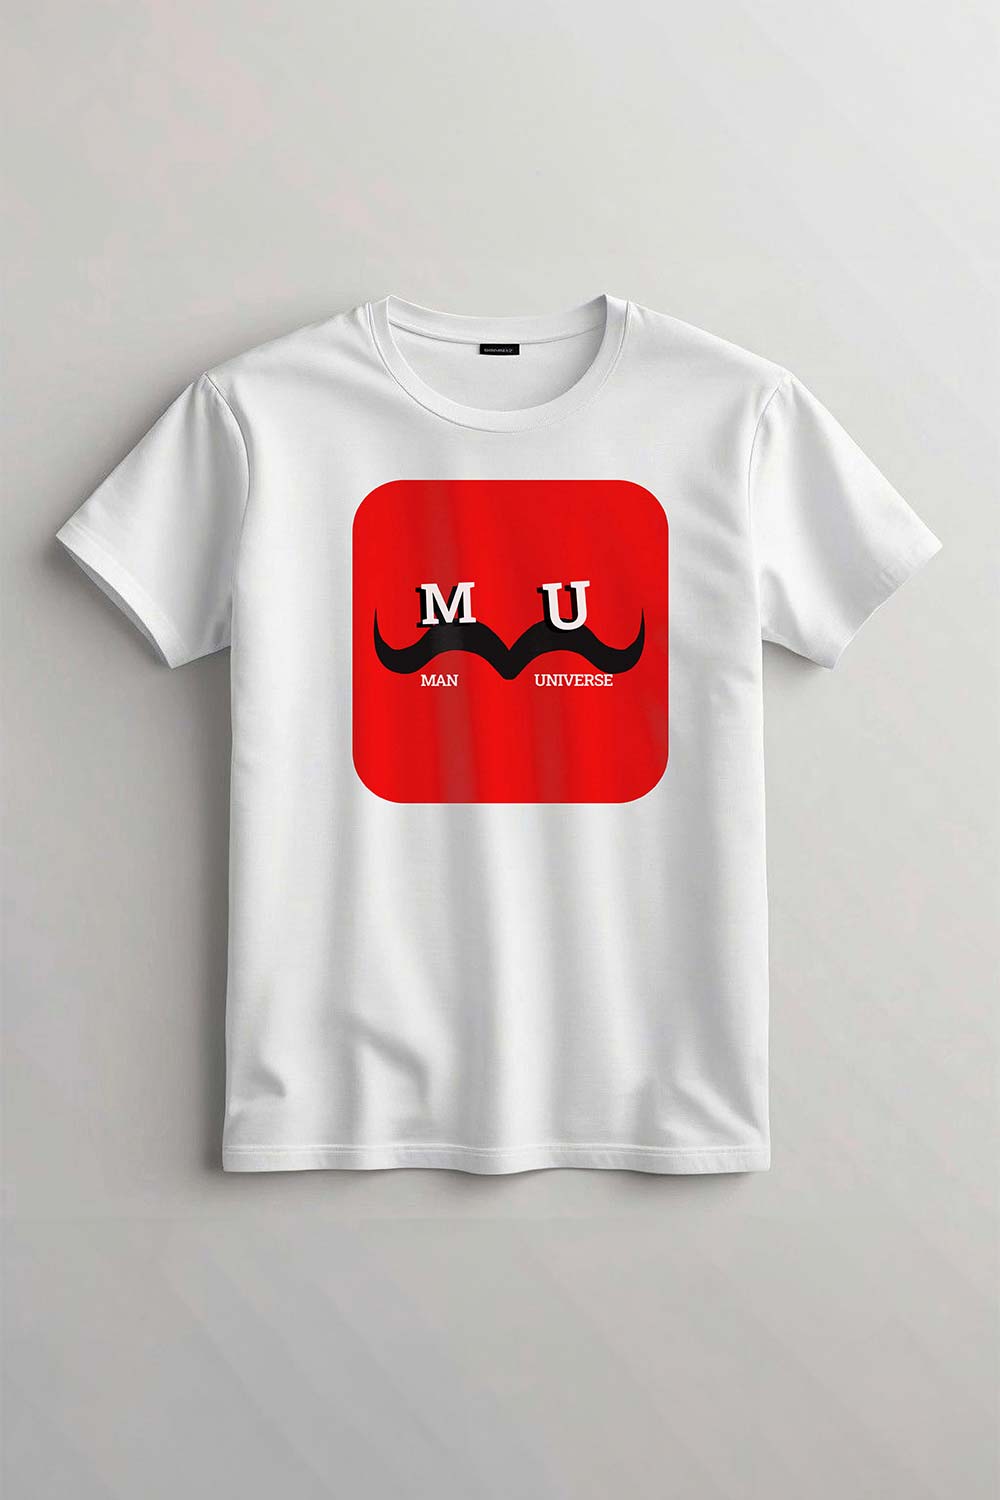 man universe t-shirt design template pinterest preview image.